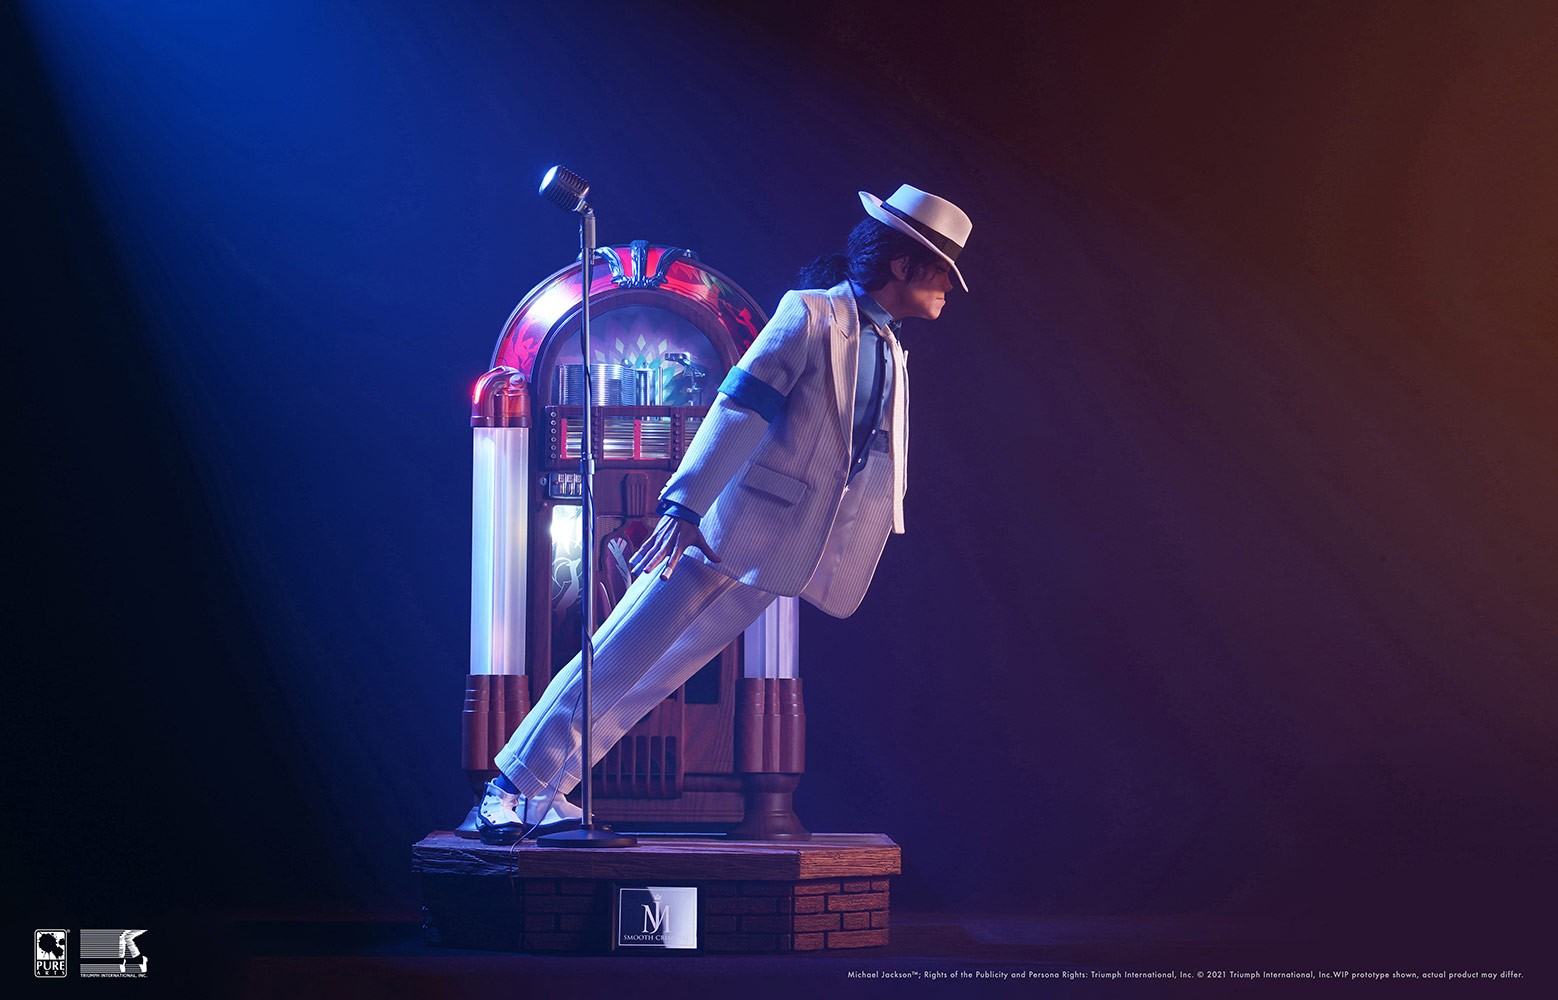 Michael Jackson: Smooth Criminal (Deluxe Version)- Prototype Shown